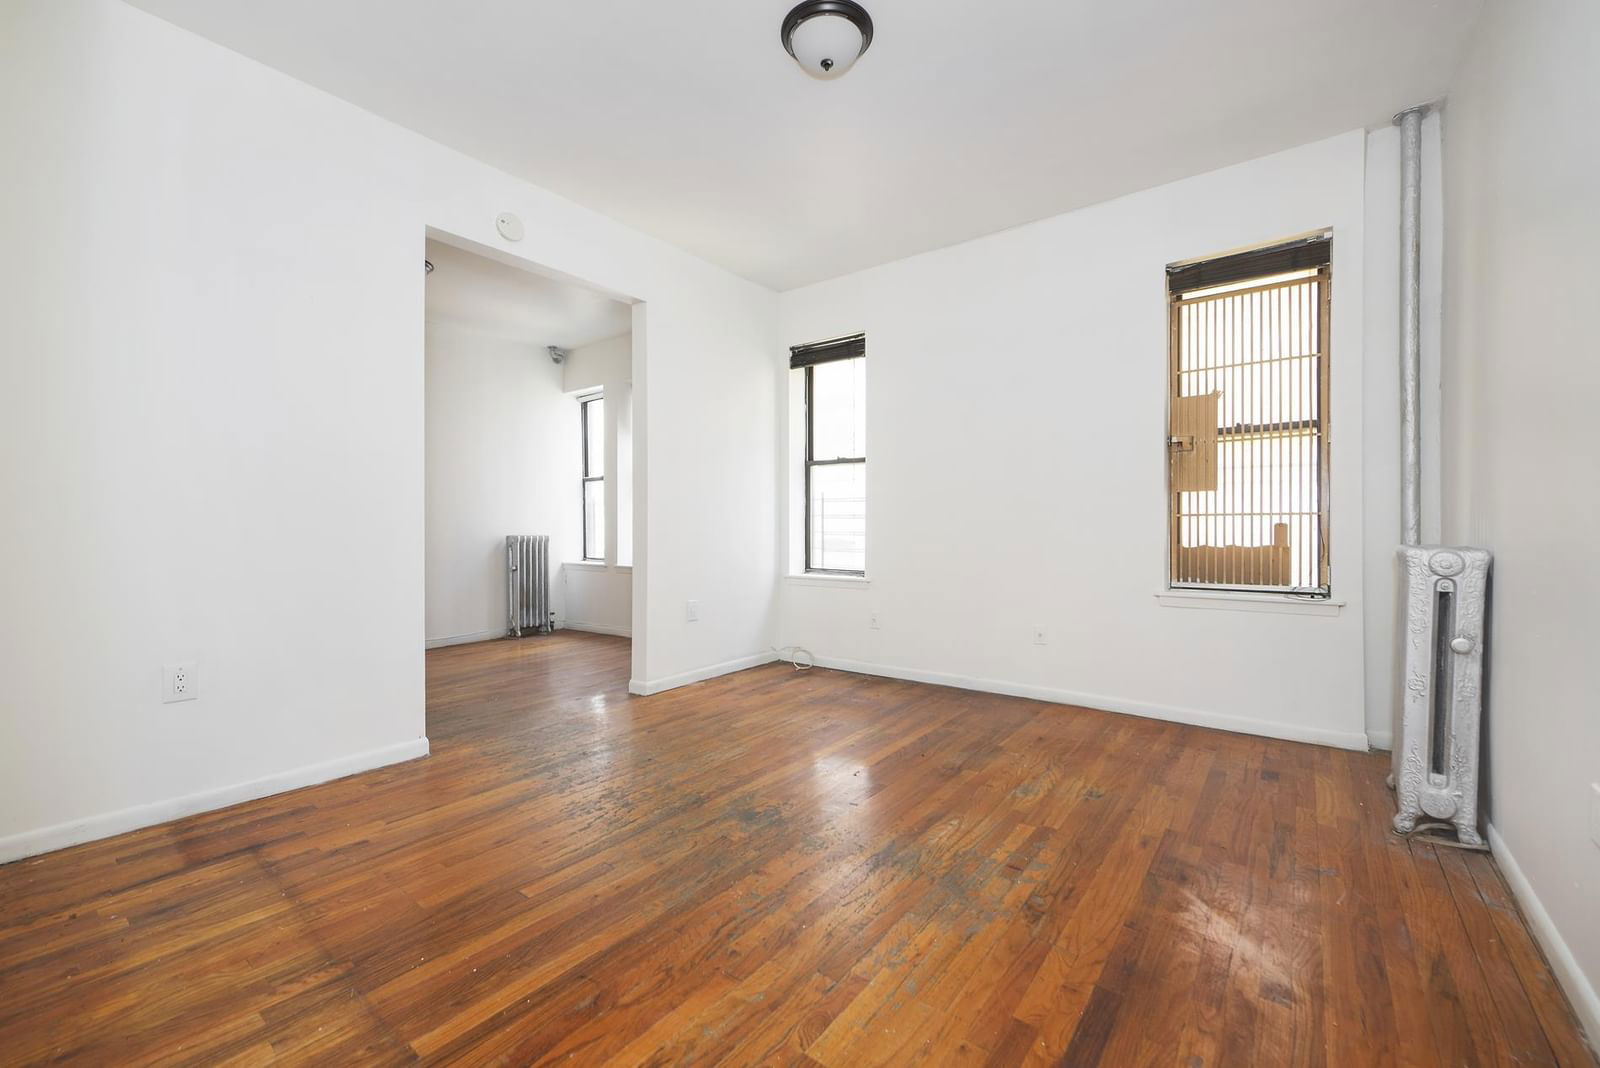 Real estate property located at 515 143rd #34, NewYork, Hamilton Heights, New York City, NY